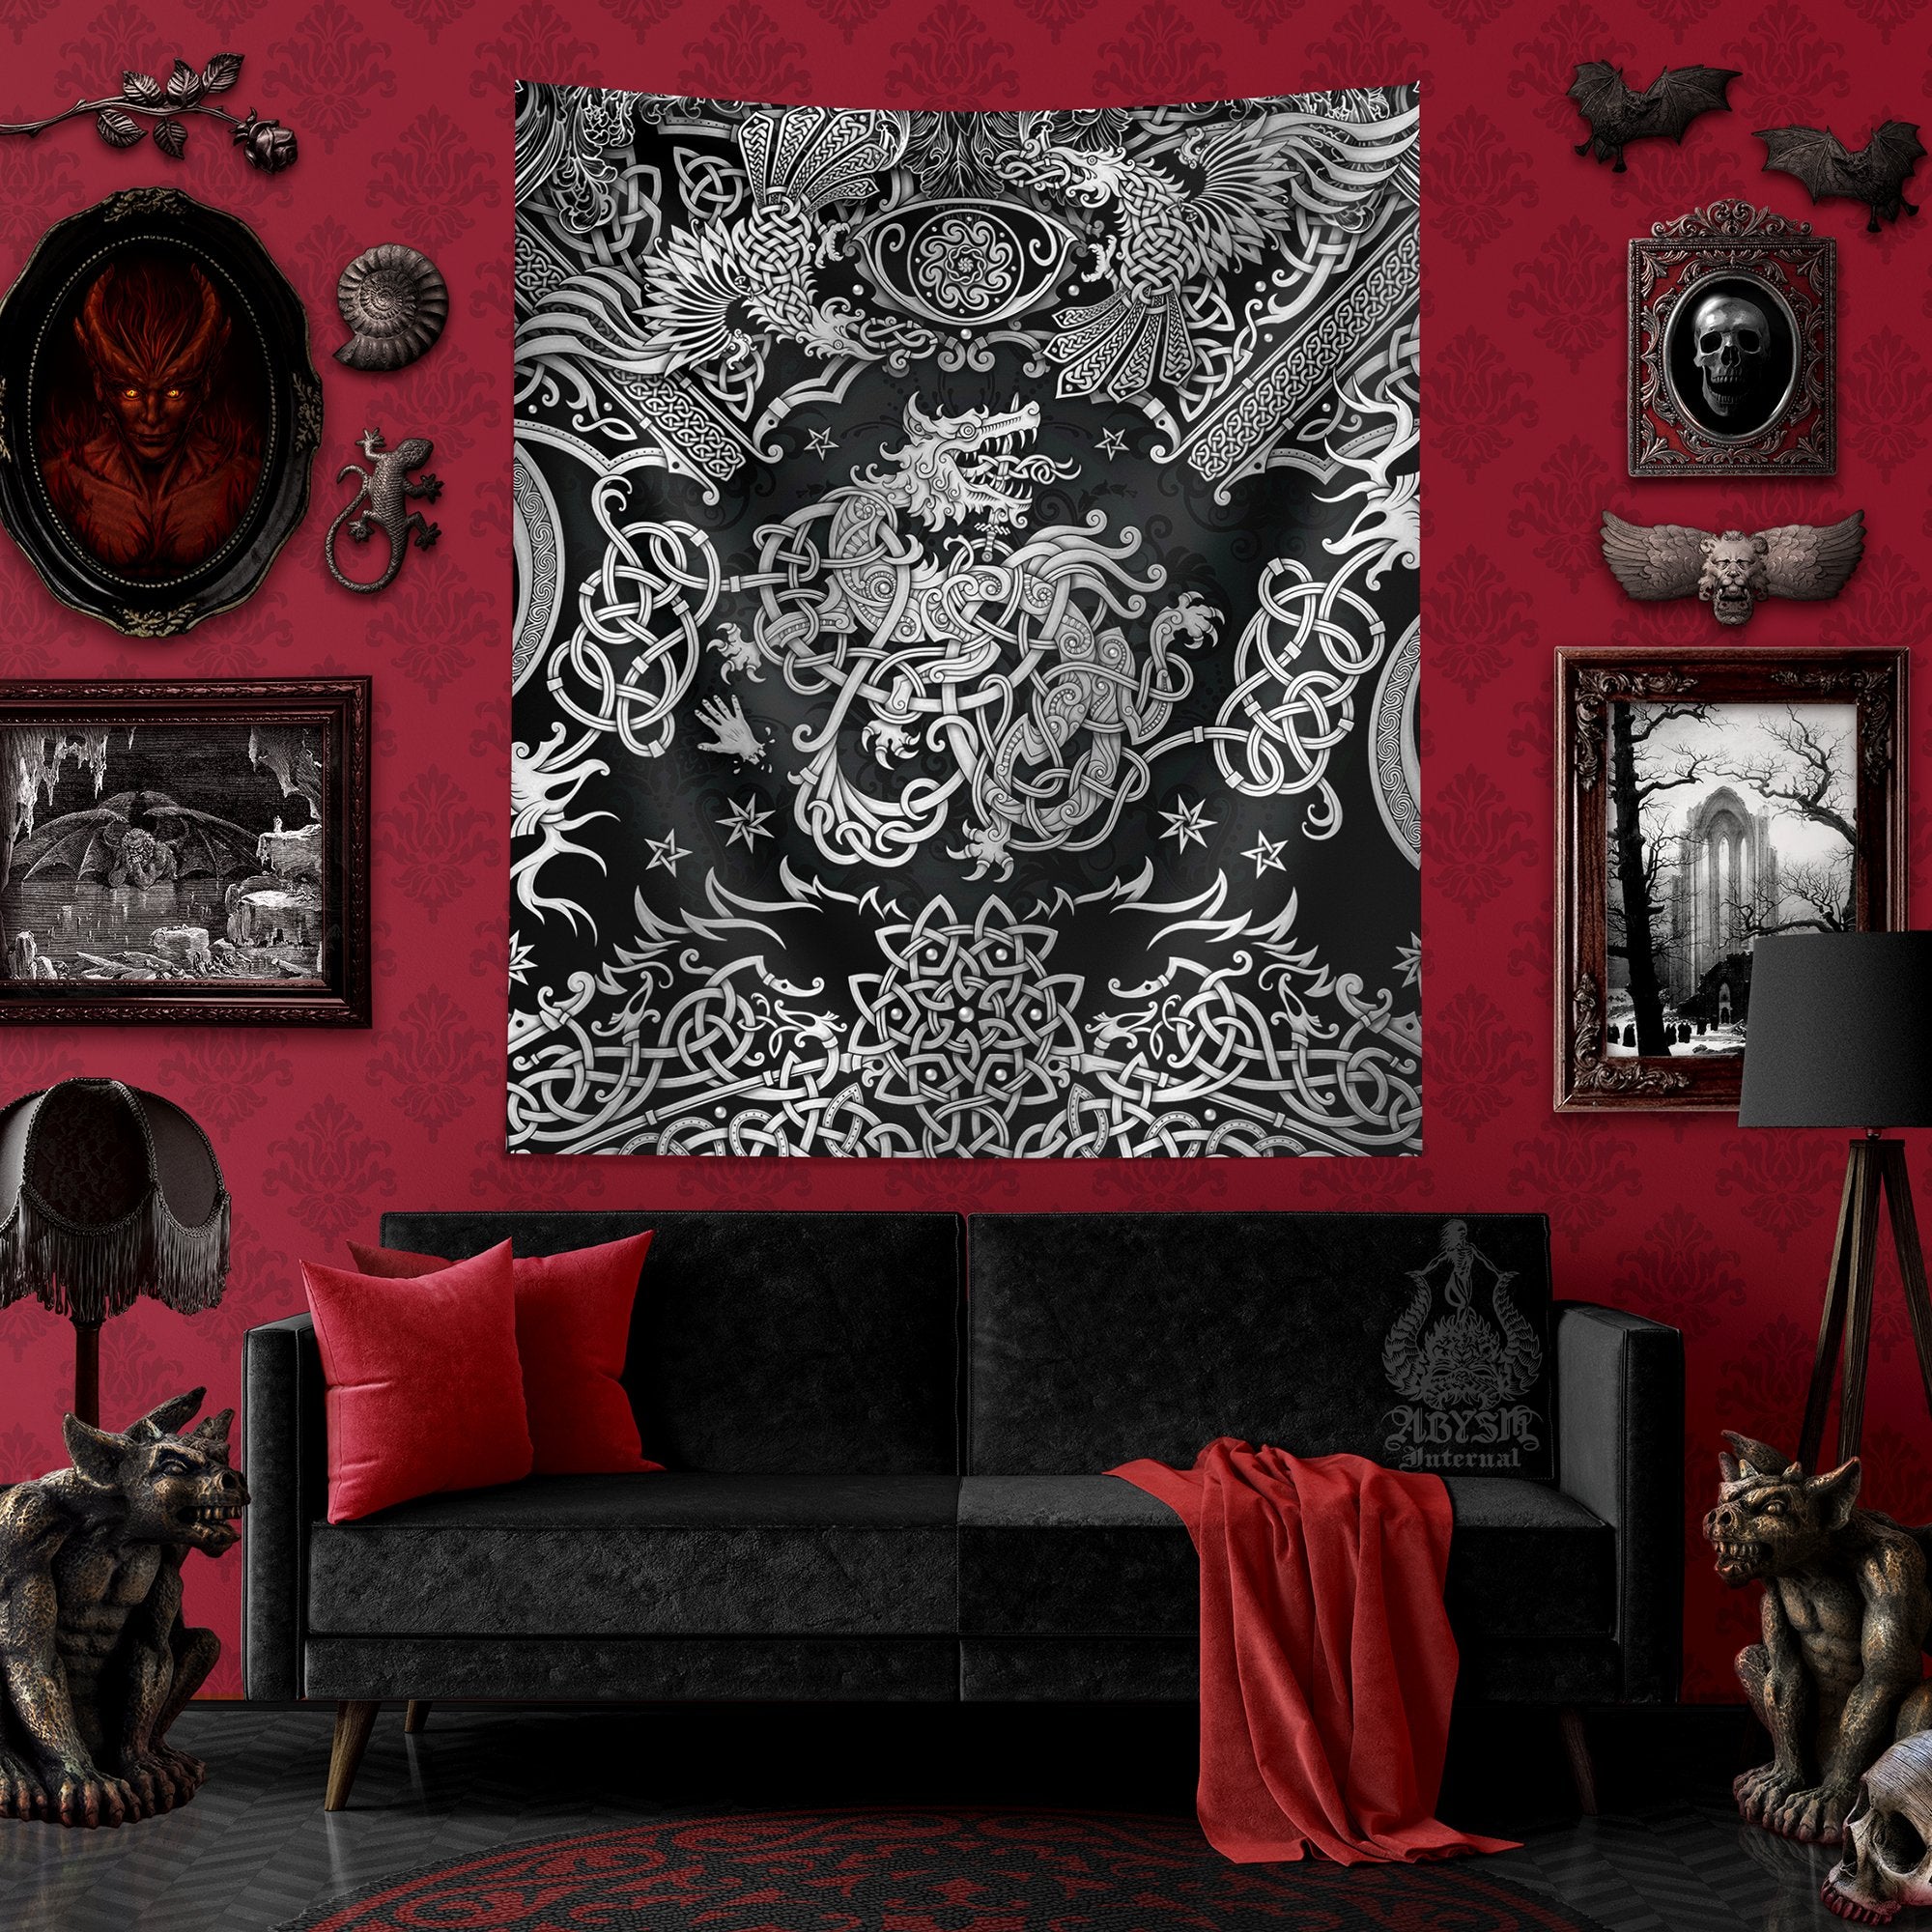 Norse Wolf Tapestry, Viking Wall Hanging, Fenrir Art, Nordic Mythology Home Decor, Vertical Print - Dark - Abysm Internal